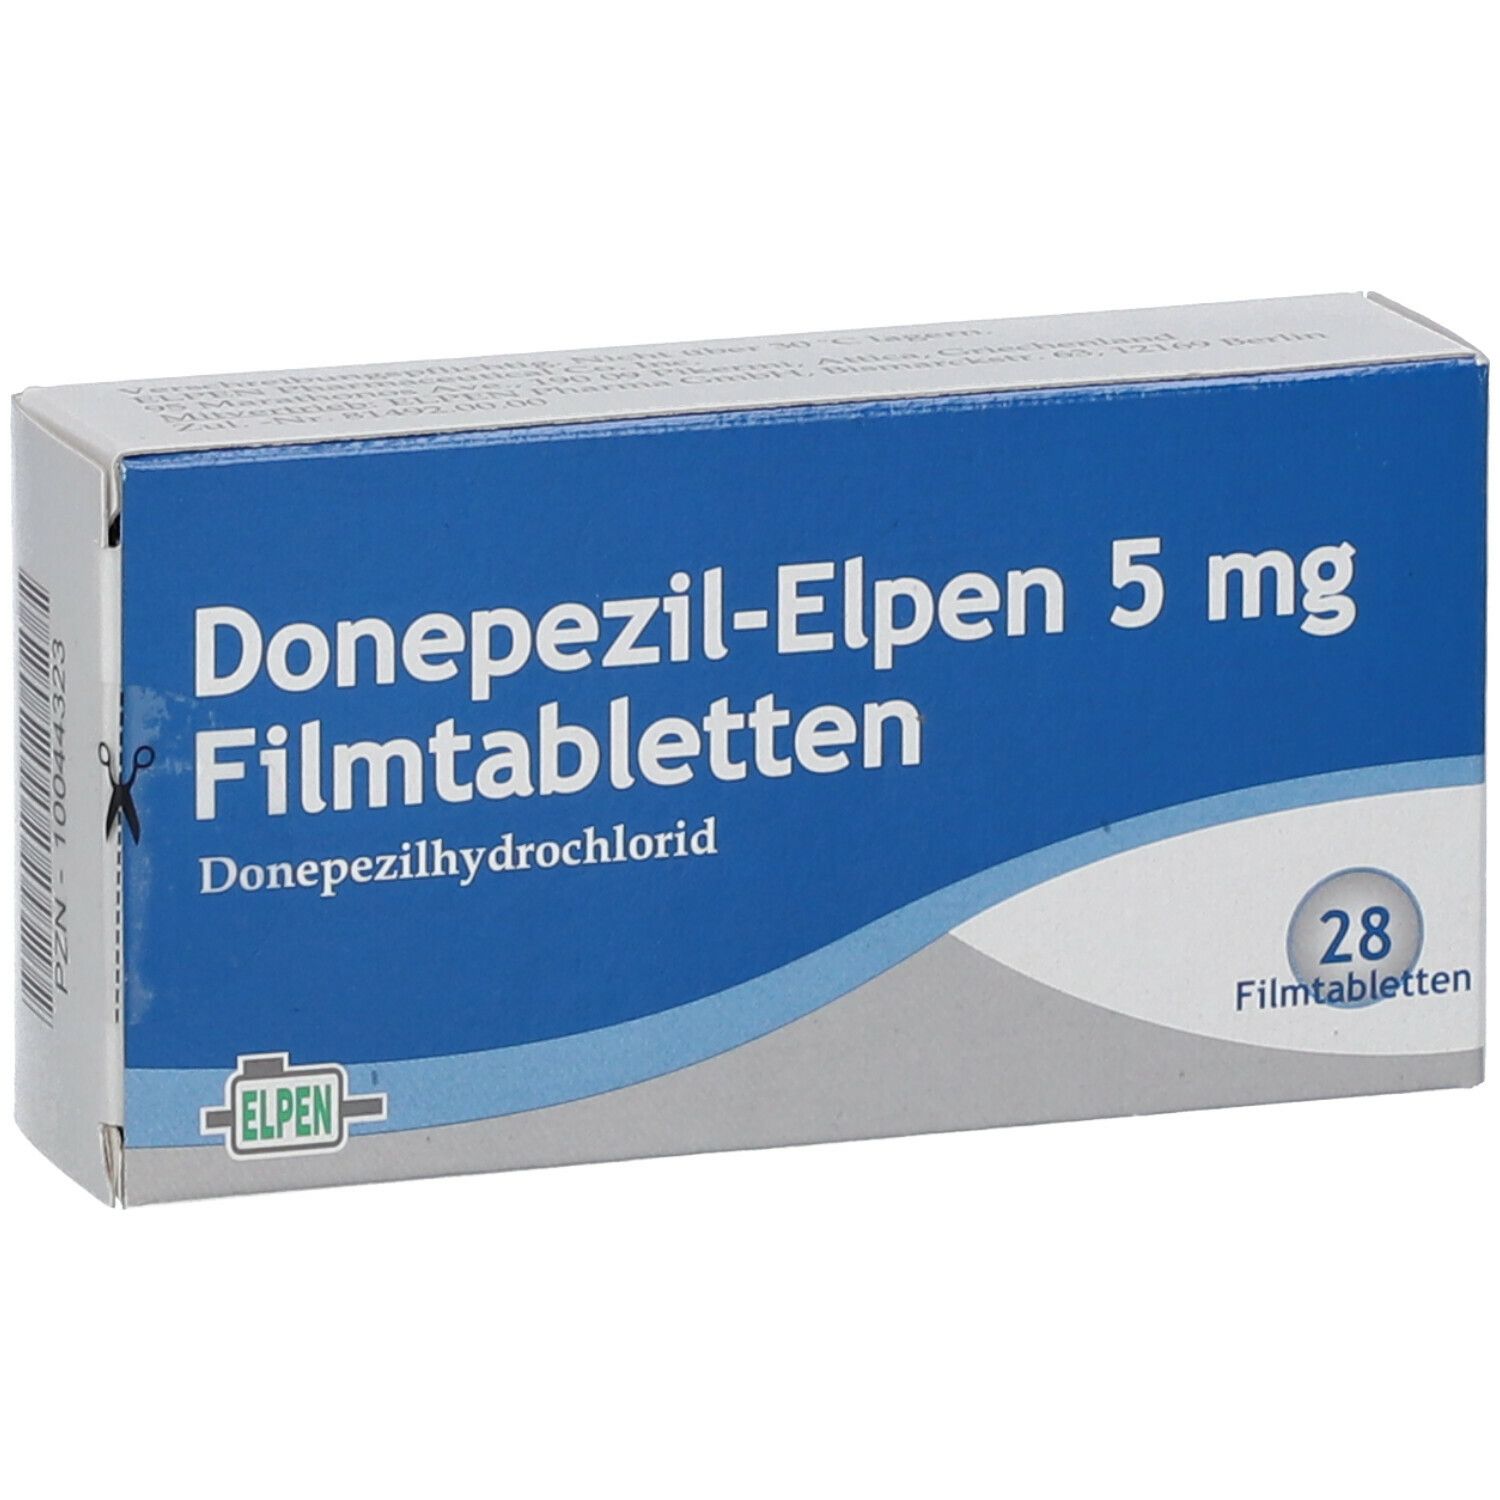 Donepezil-Elpen 5 mg